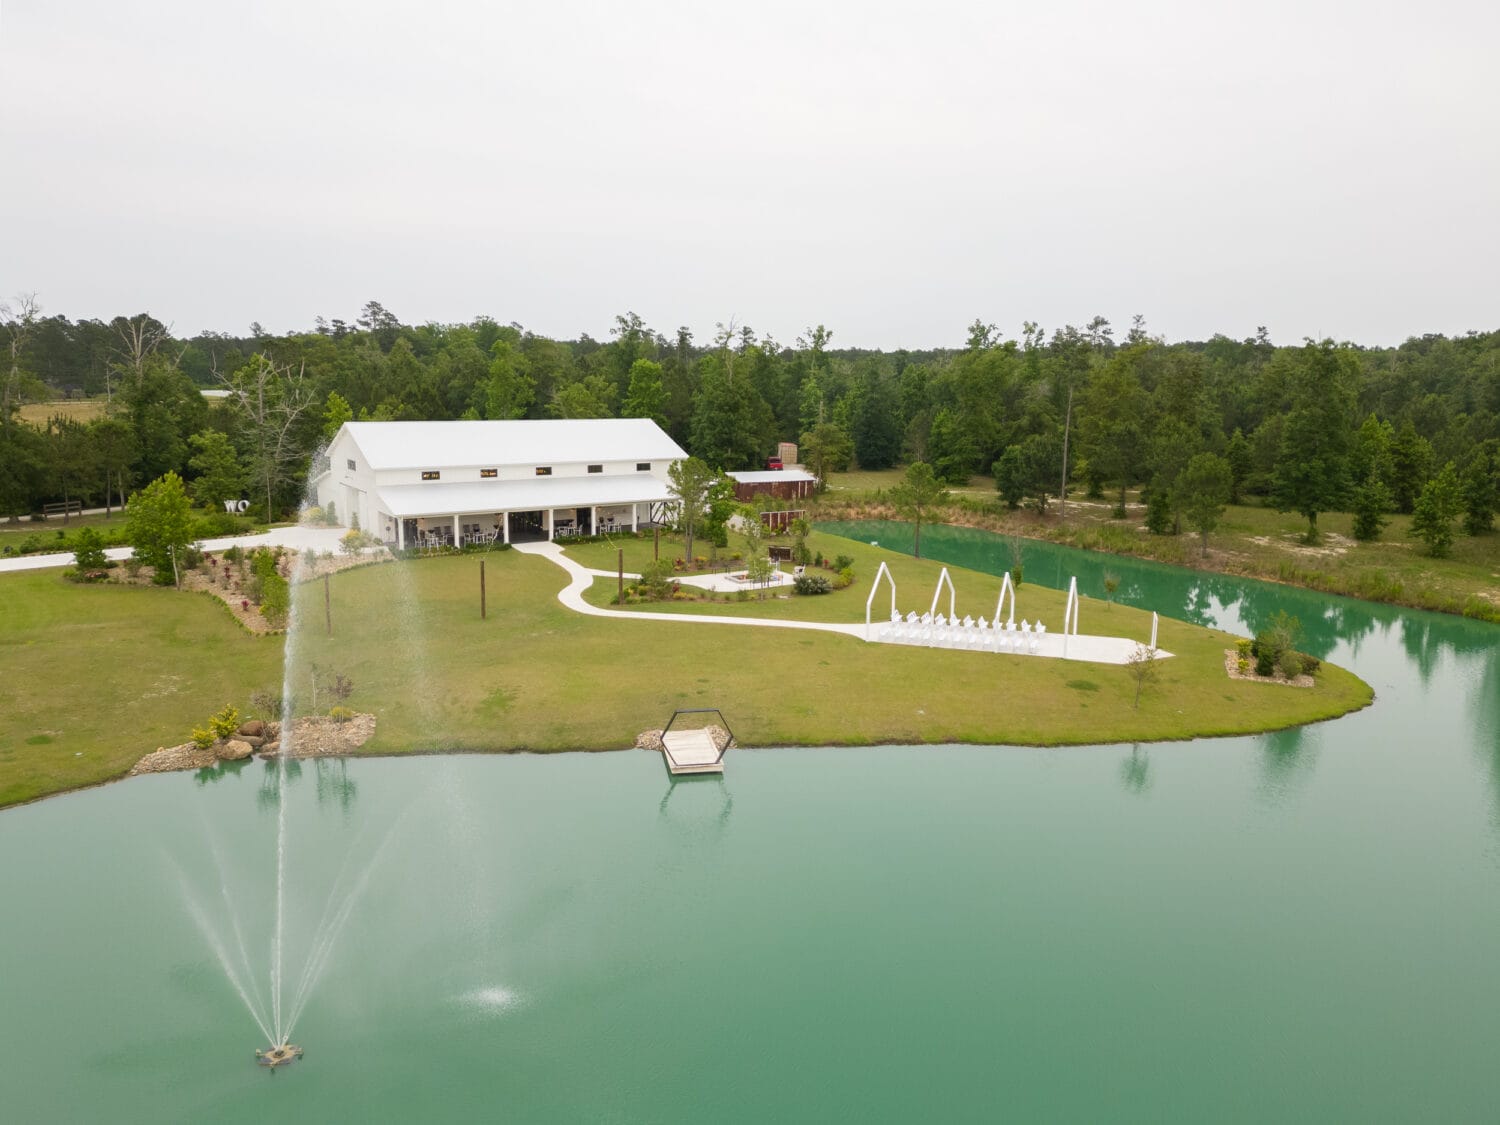 Drone picture over the lake - The Venue at White Oaks Farm